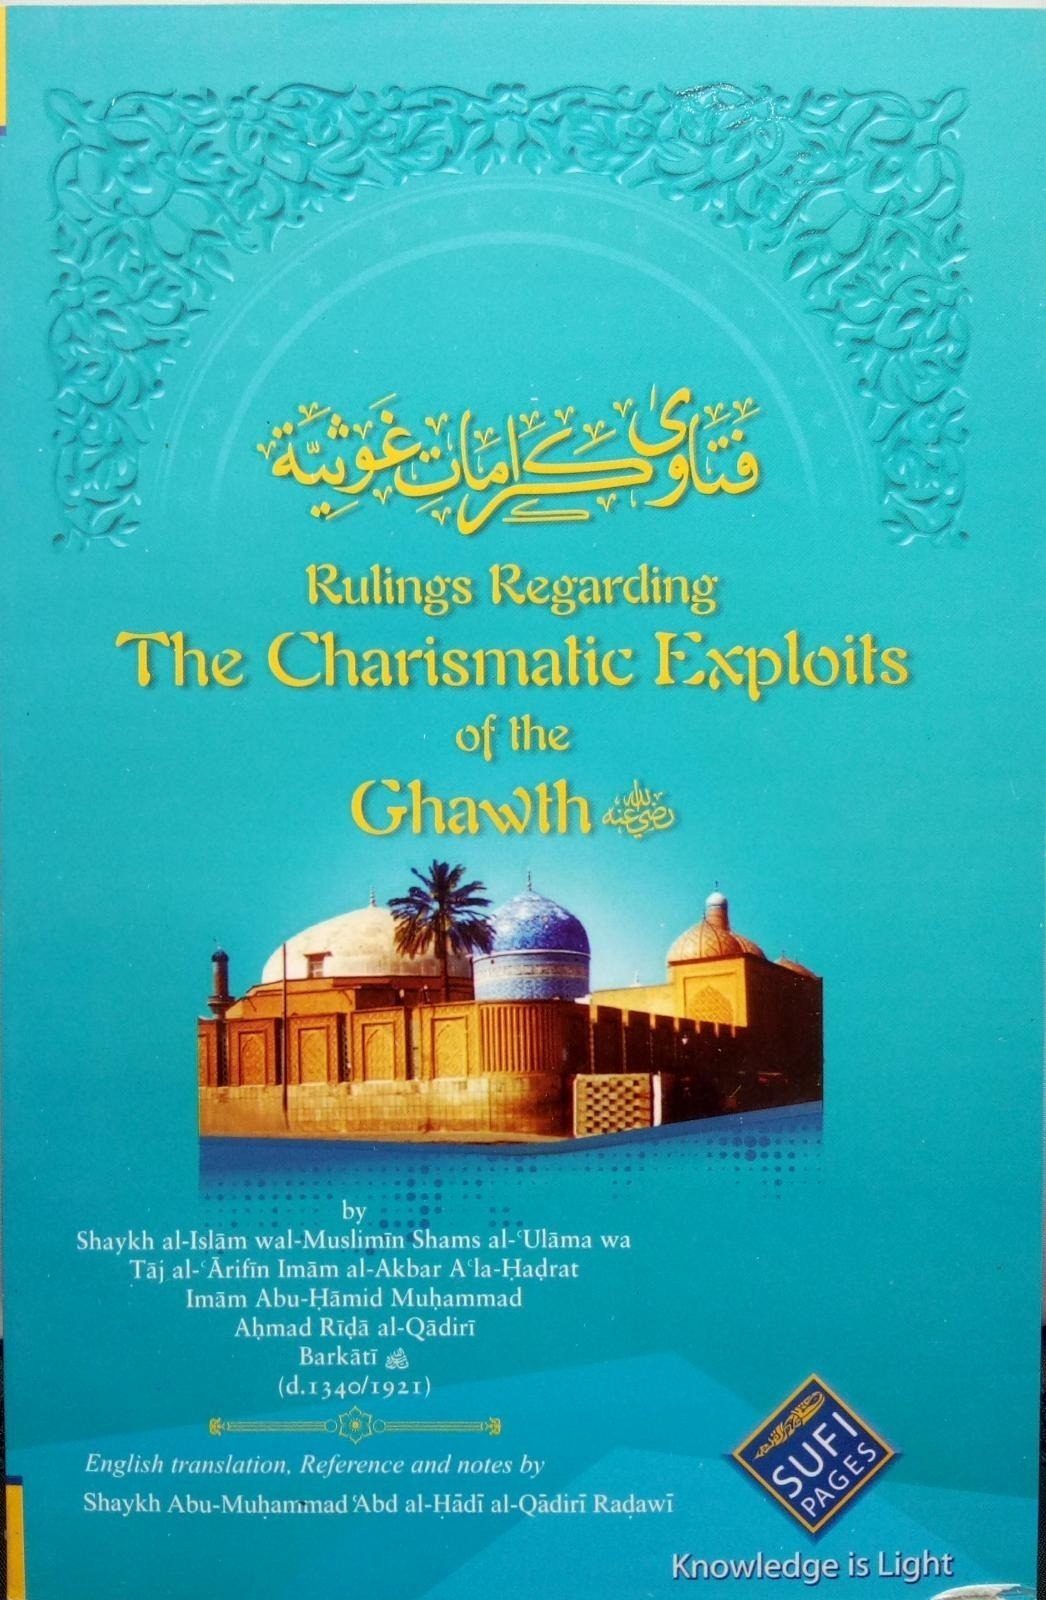 Rulings Regarding The Charismatic Exploits of the Ghawth